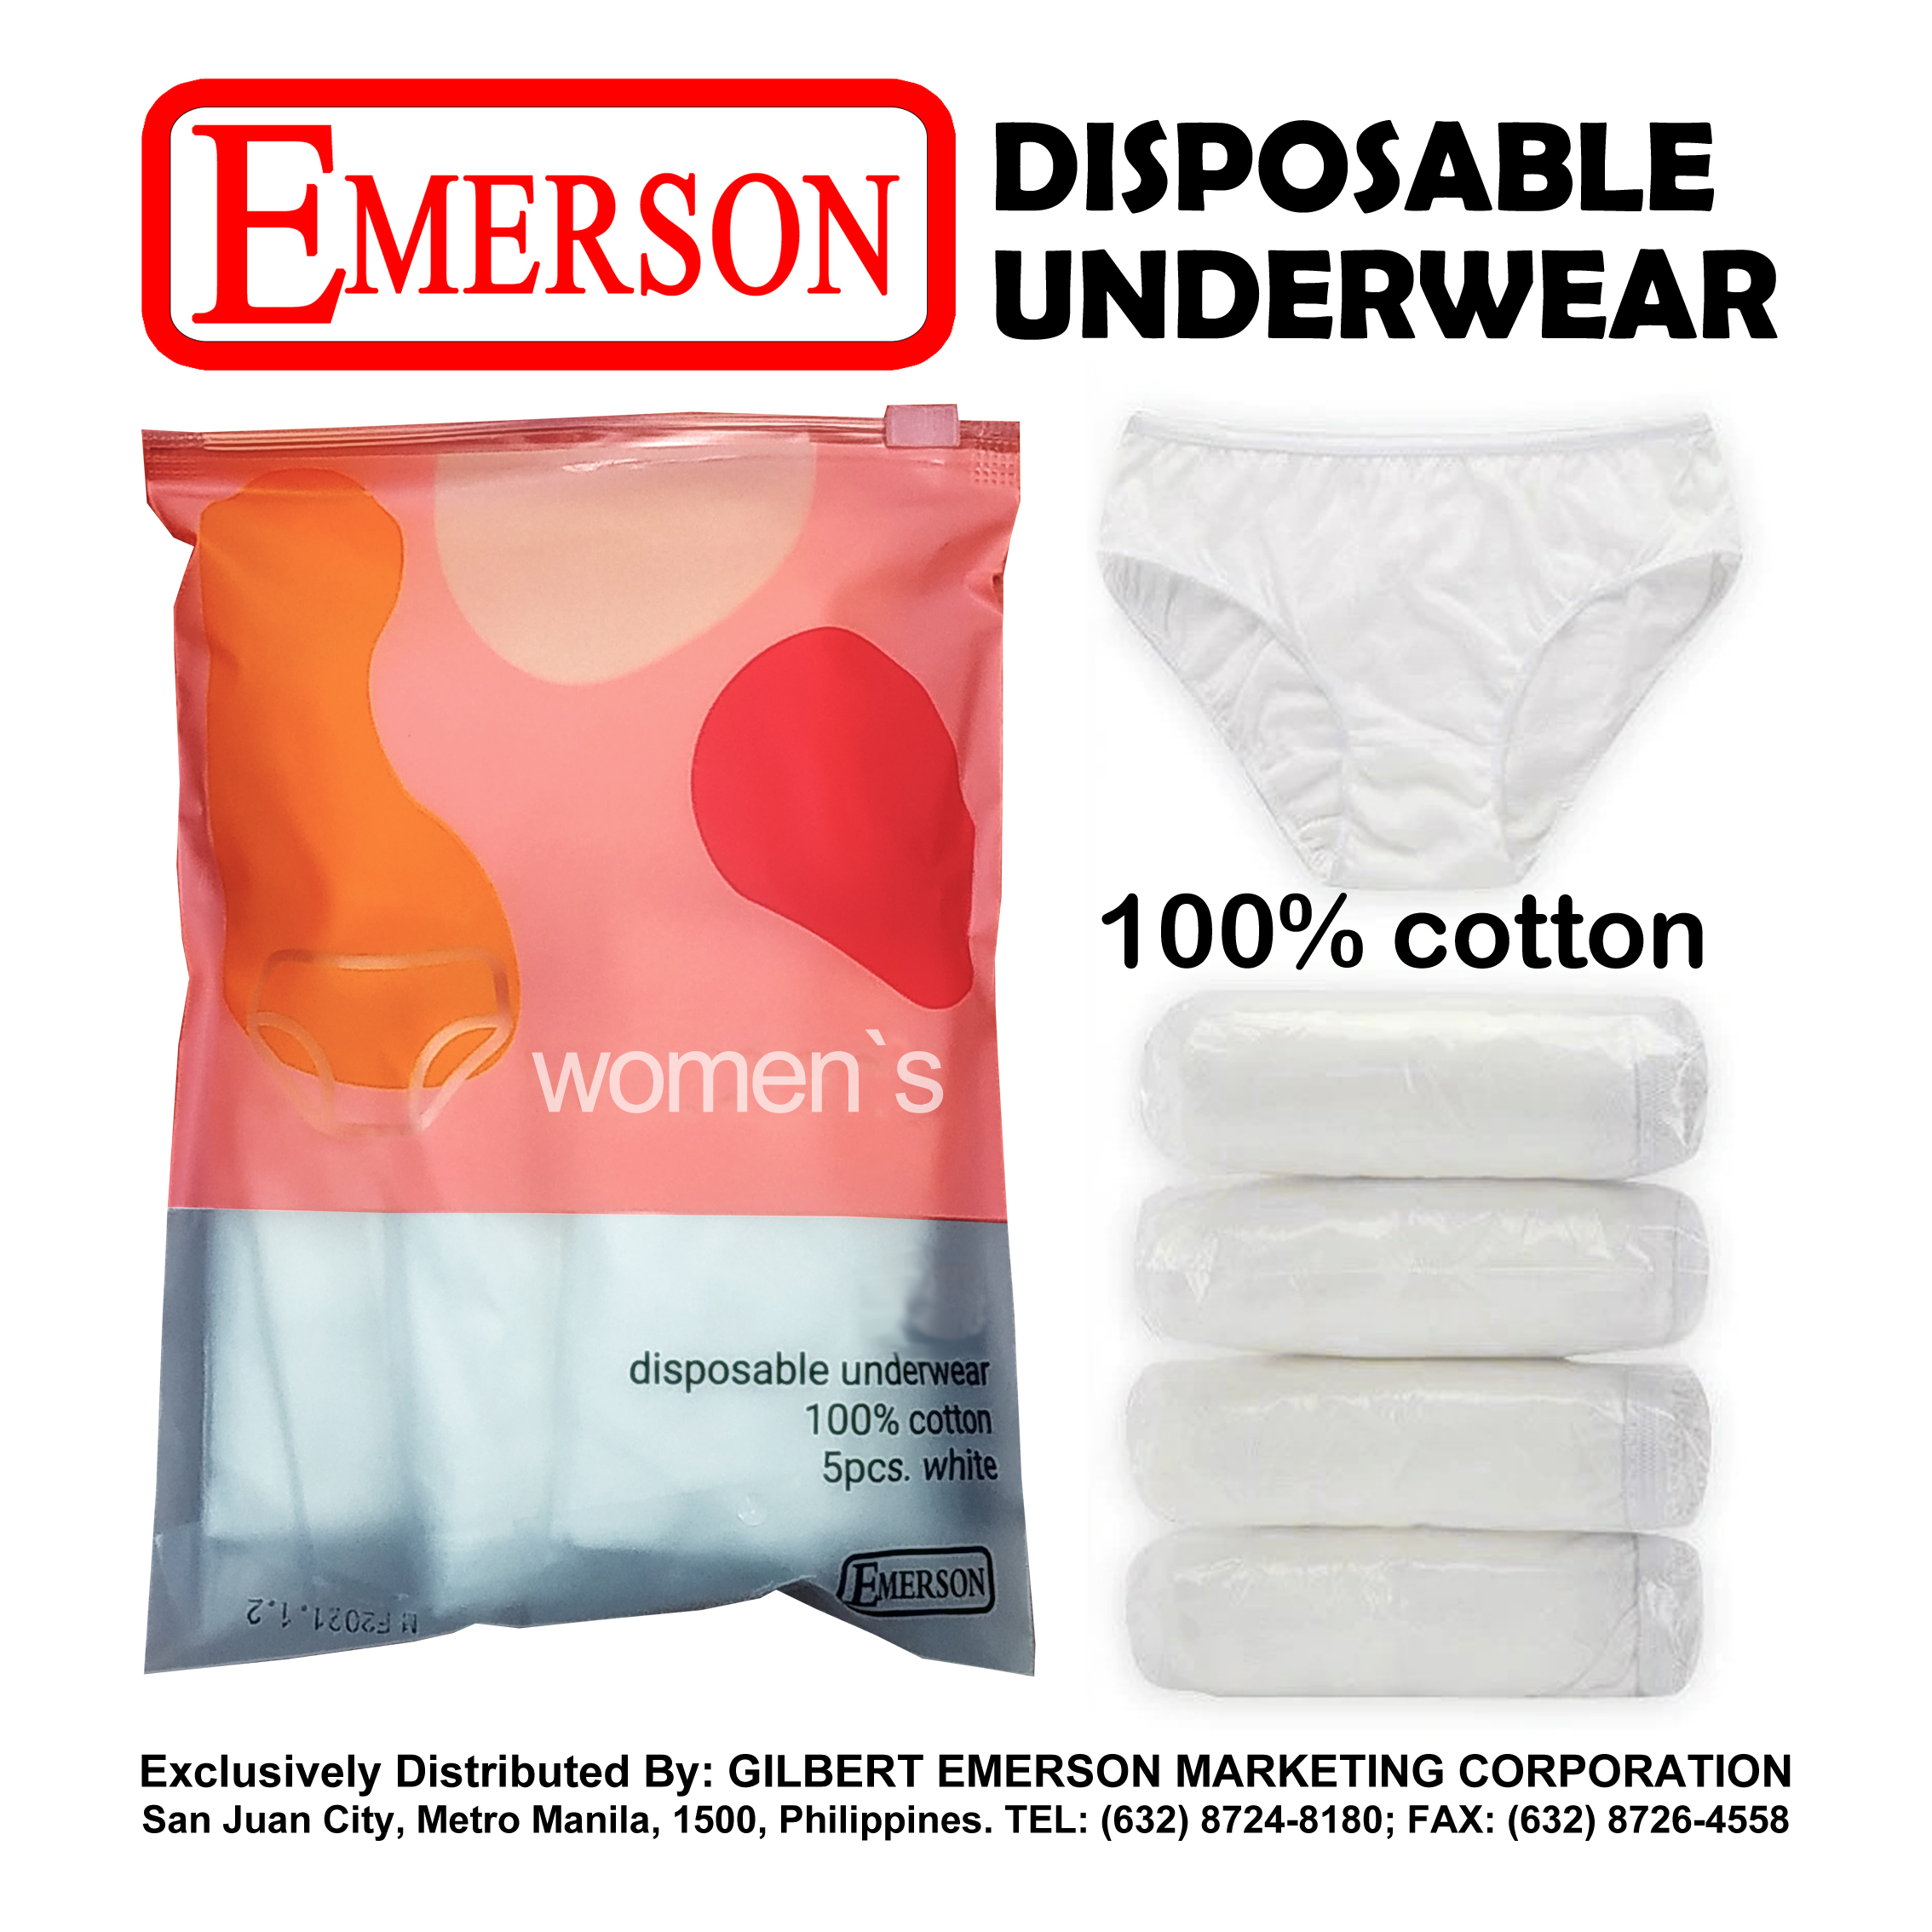 100% Cotton Ladies Disposable Panties, Ladies Cotton Underwear for